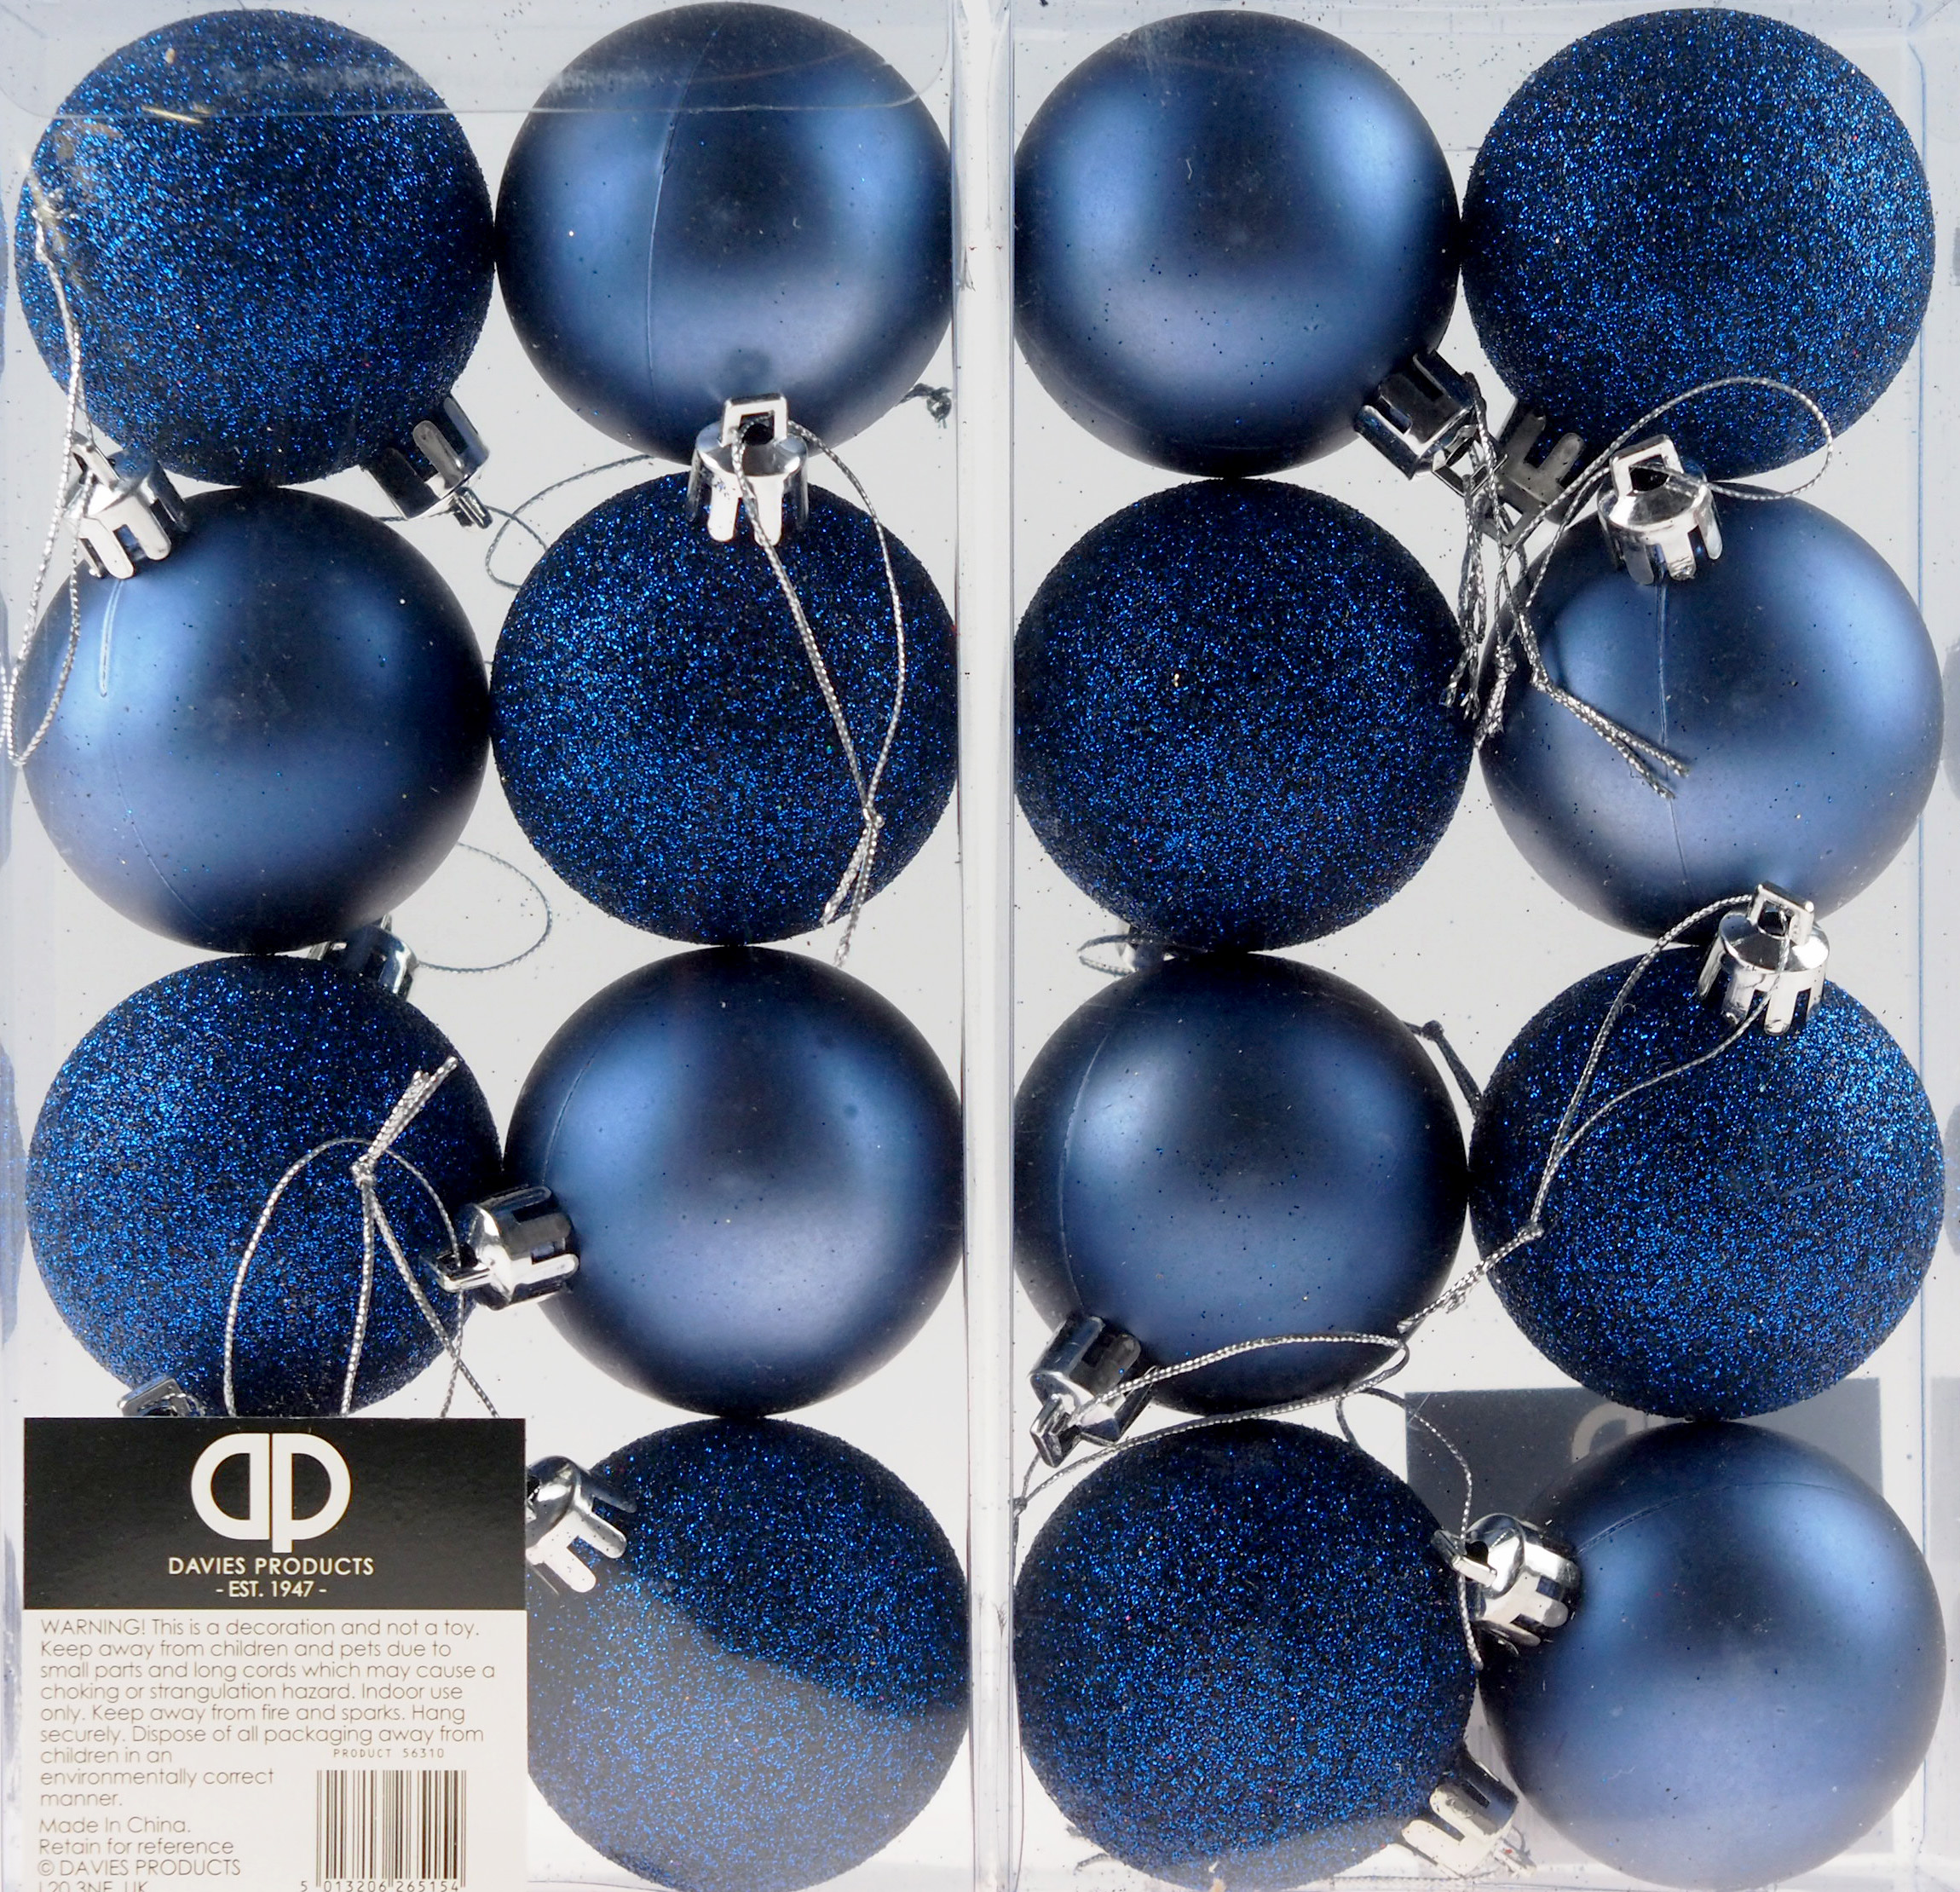 6” Silver Glittered Net Ball Ornament